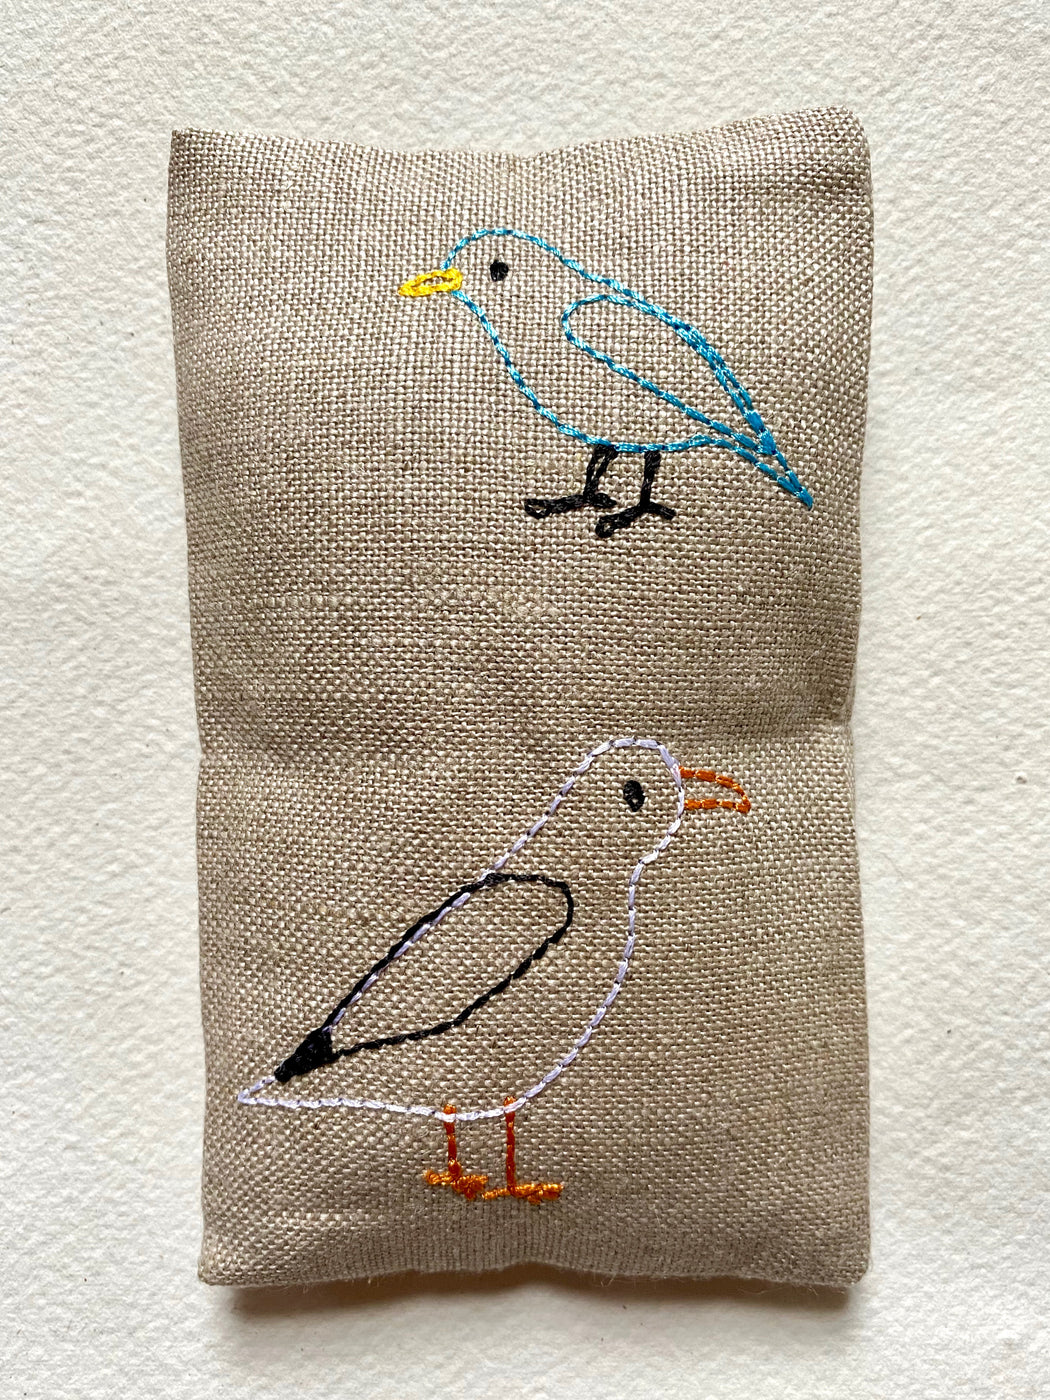 K Studio "Birds of the World" Embroidered Sachets